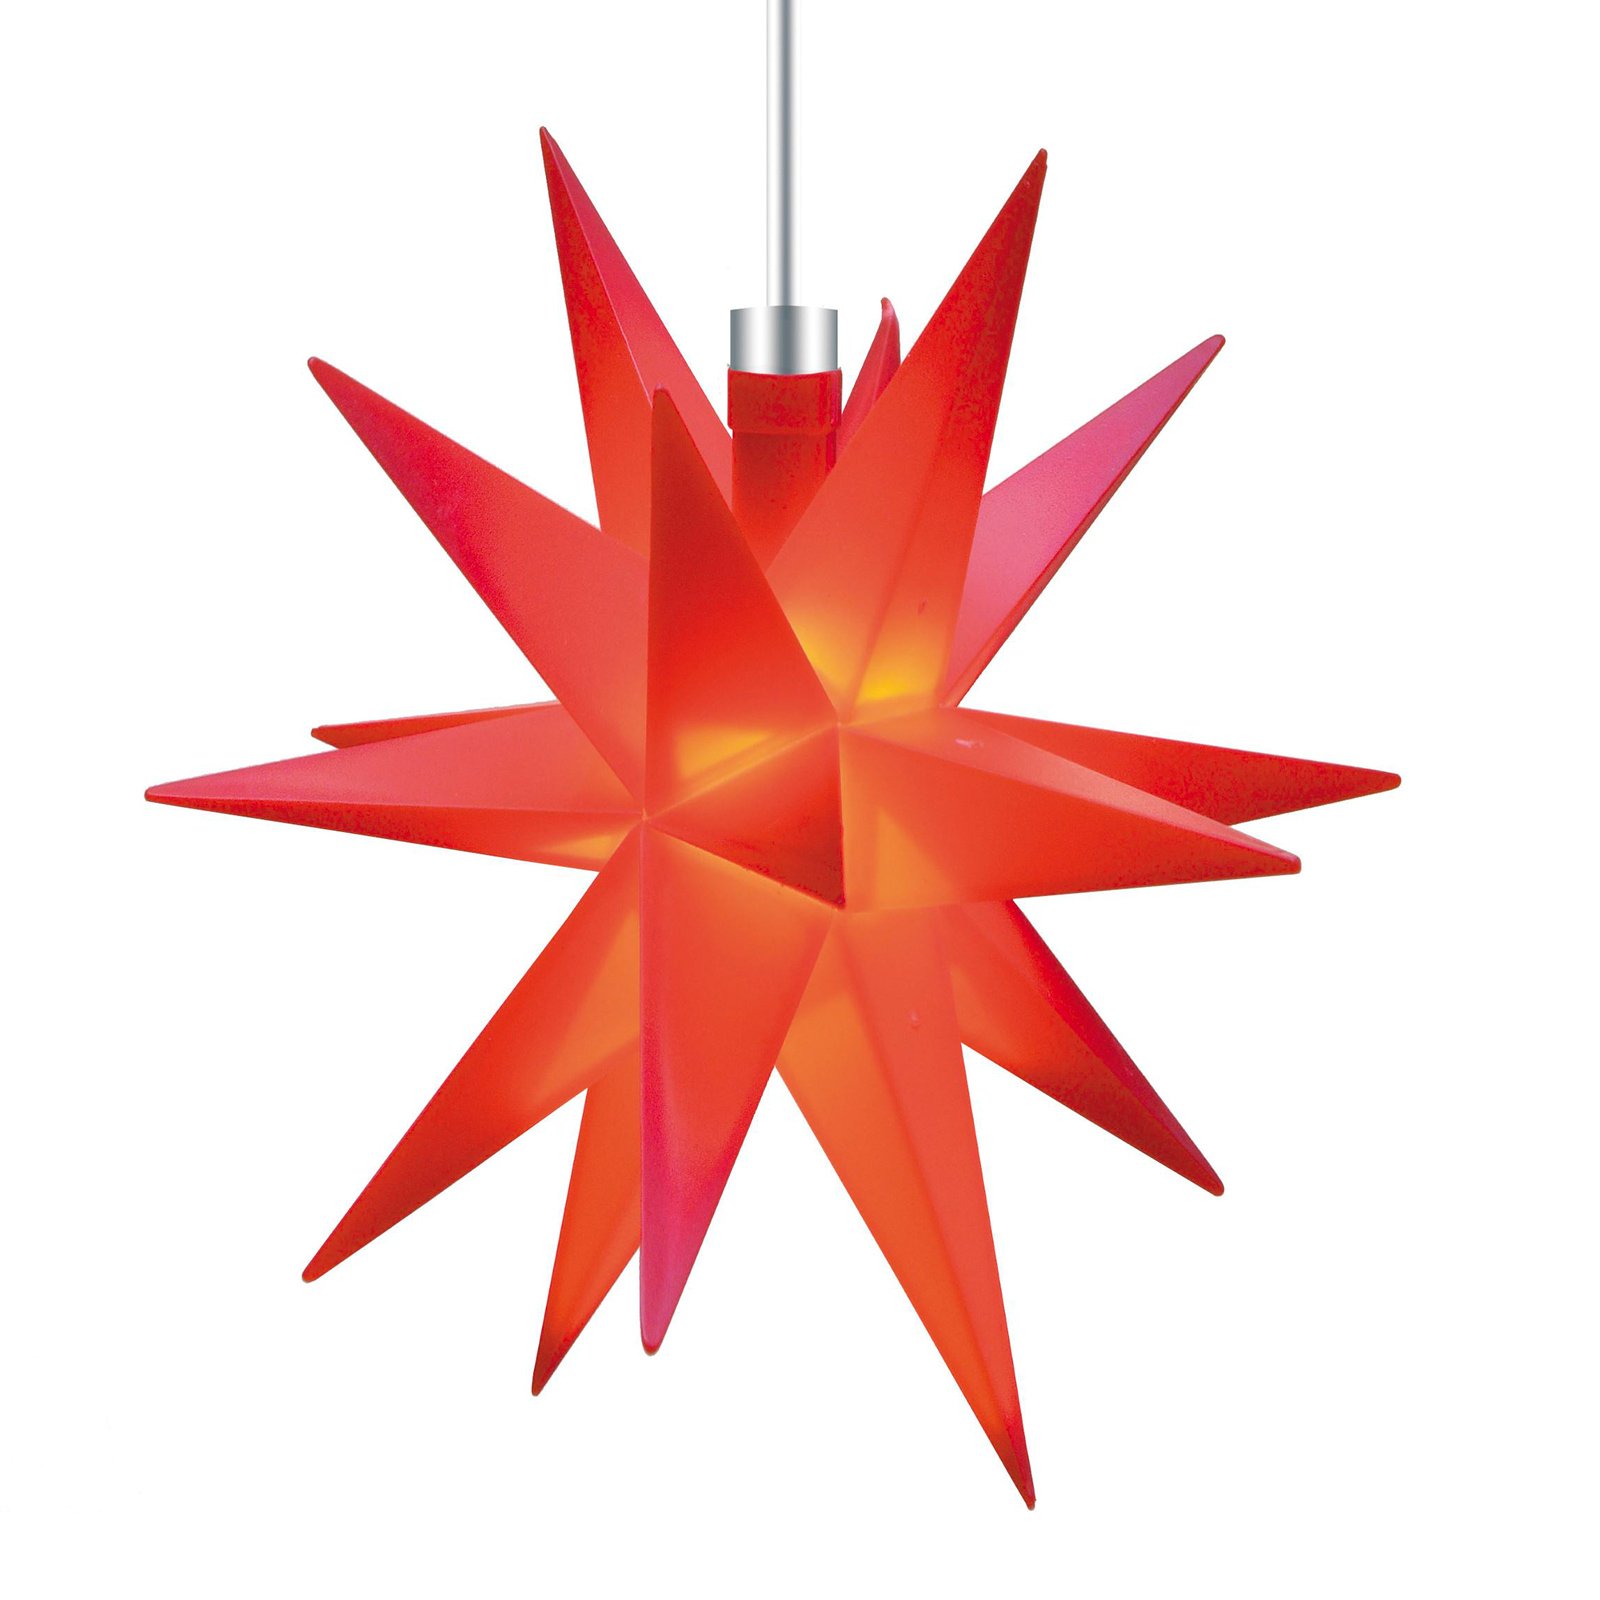 Heminredning - 18-uddig stjärna Ø 12 cm röd